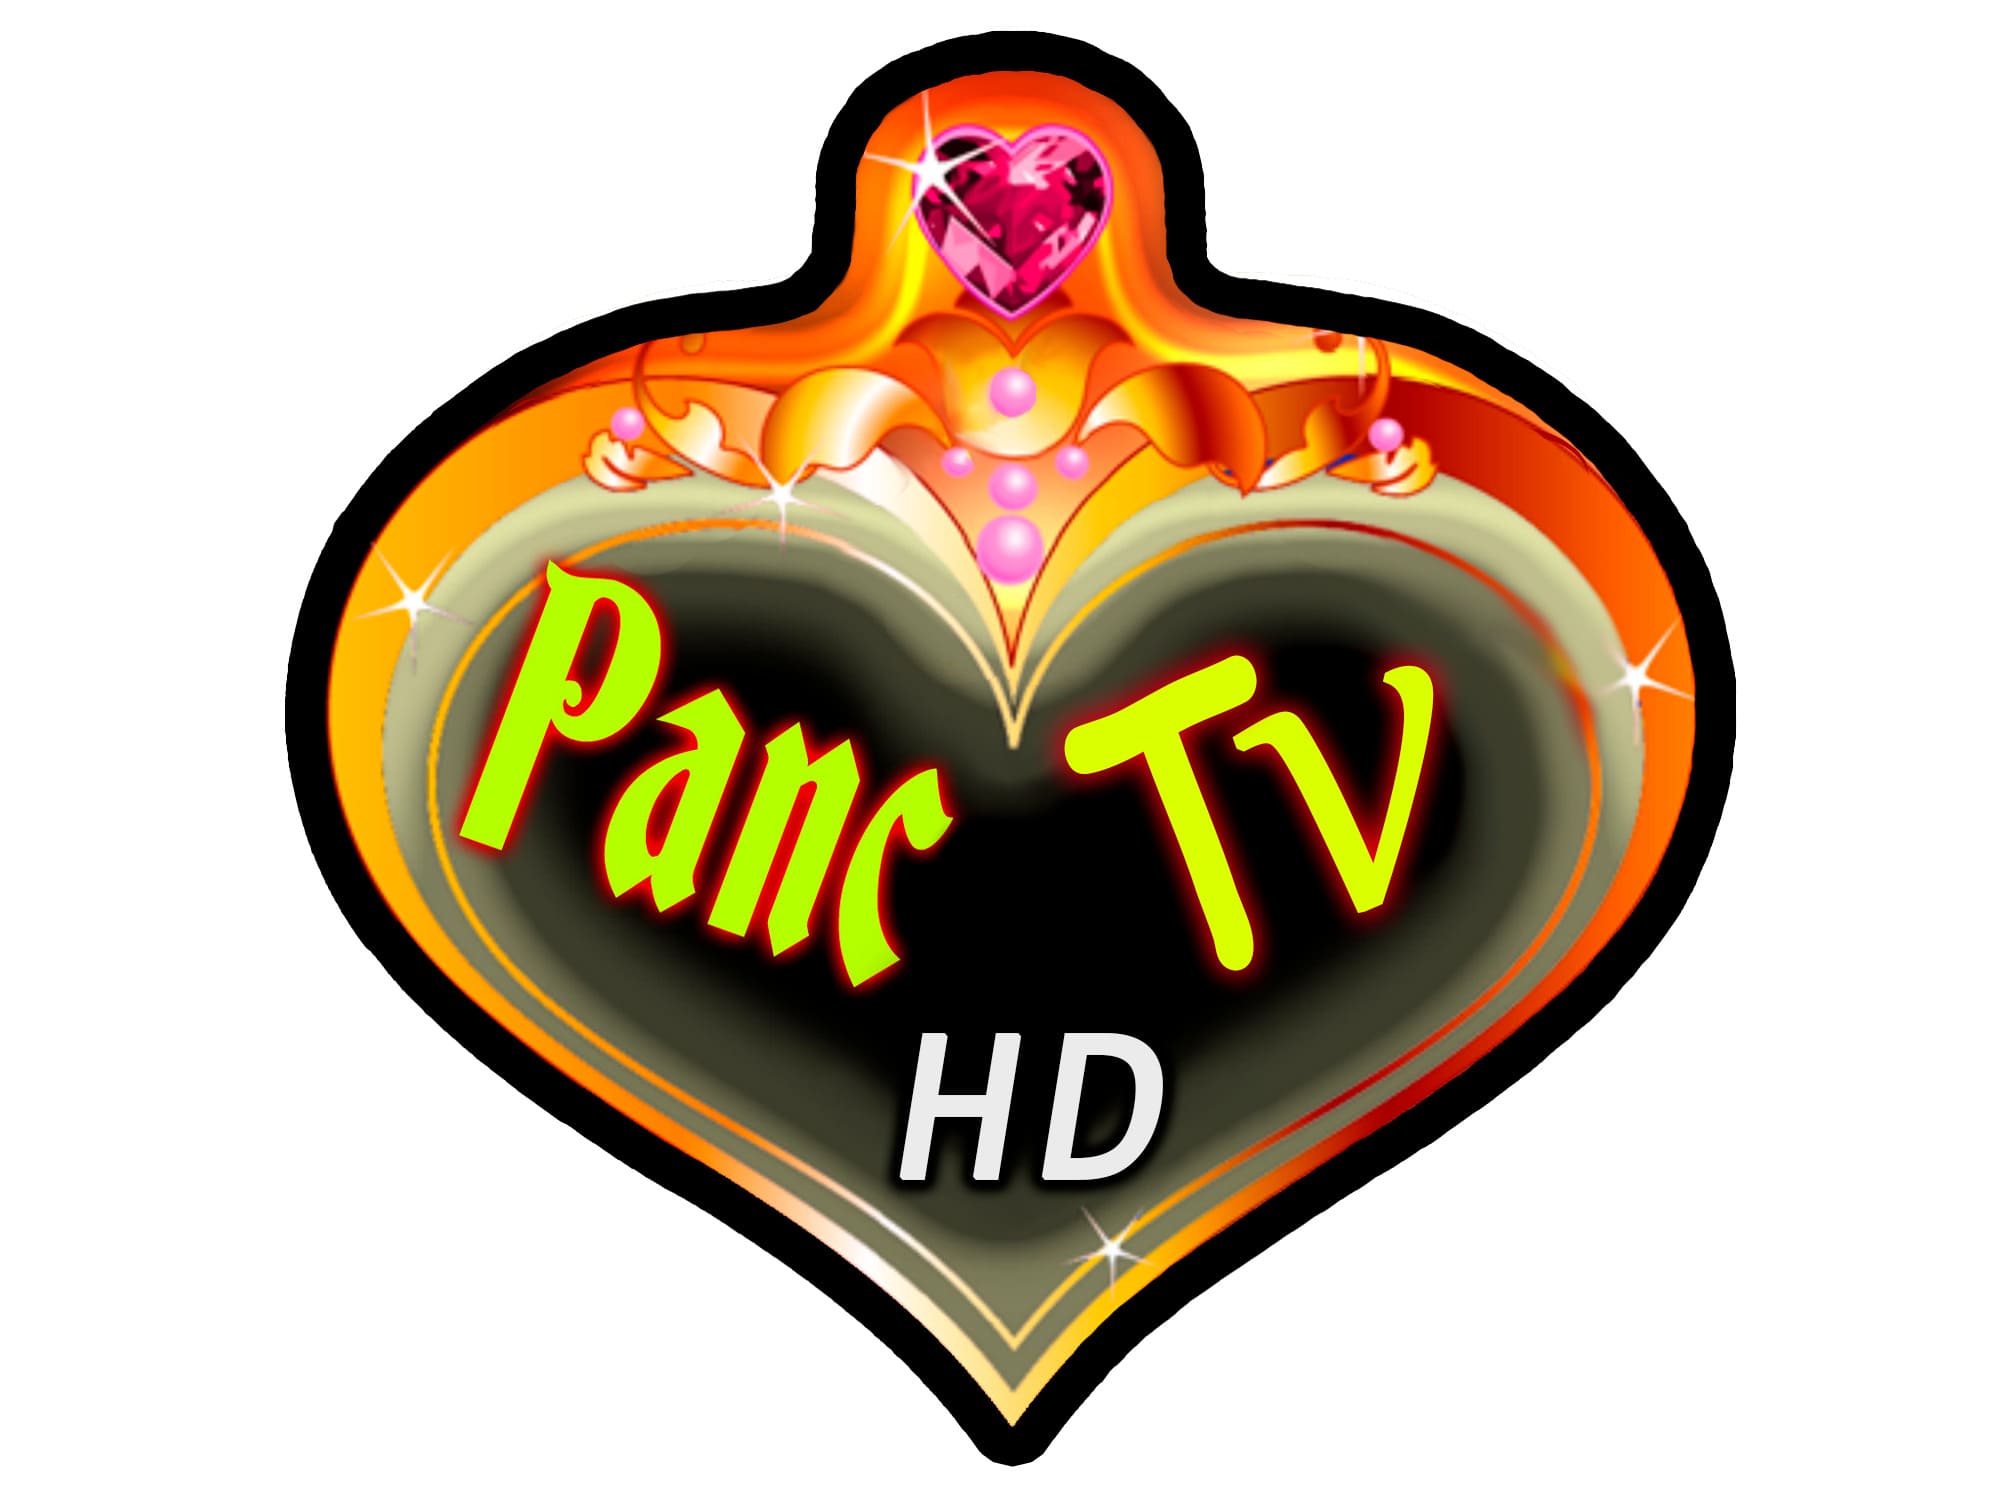 canal PANC TV TUCUMAN